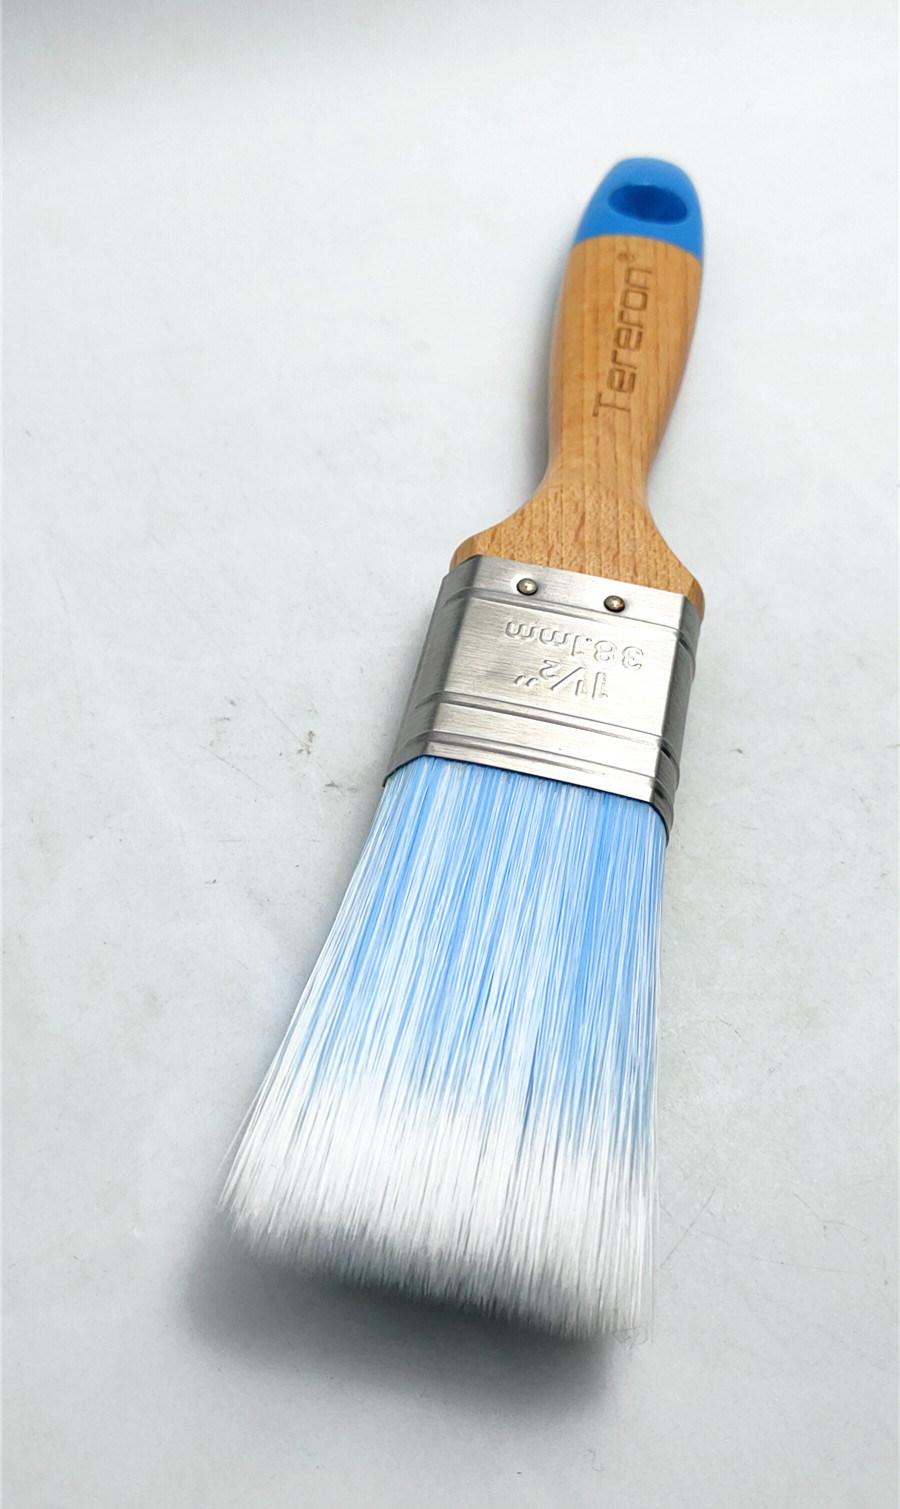 Wholesale House Flexible Decorative Wall Paint Brushes